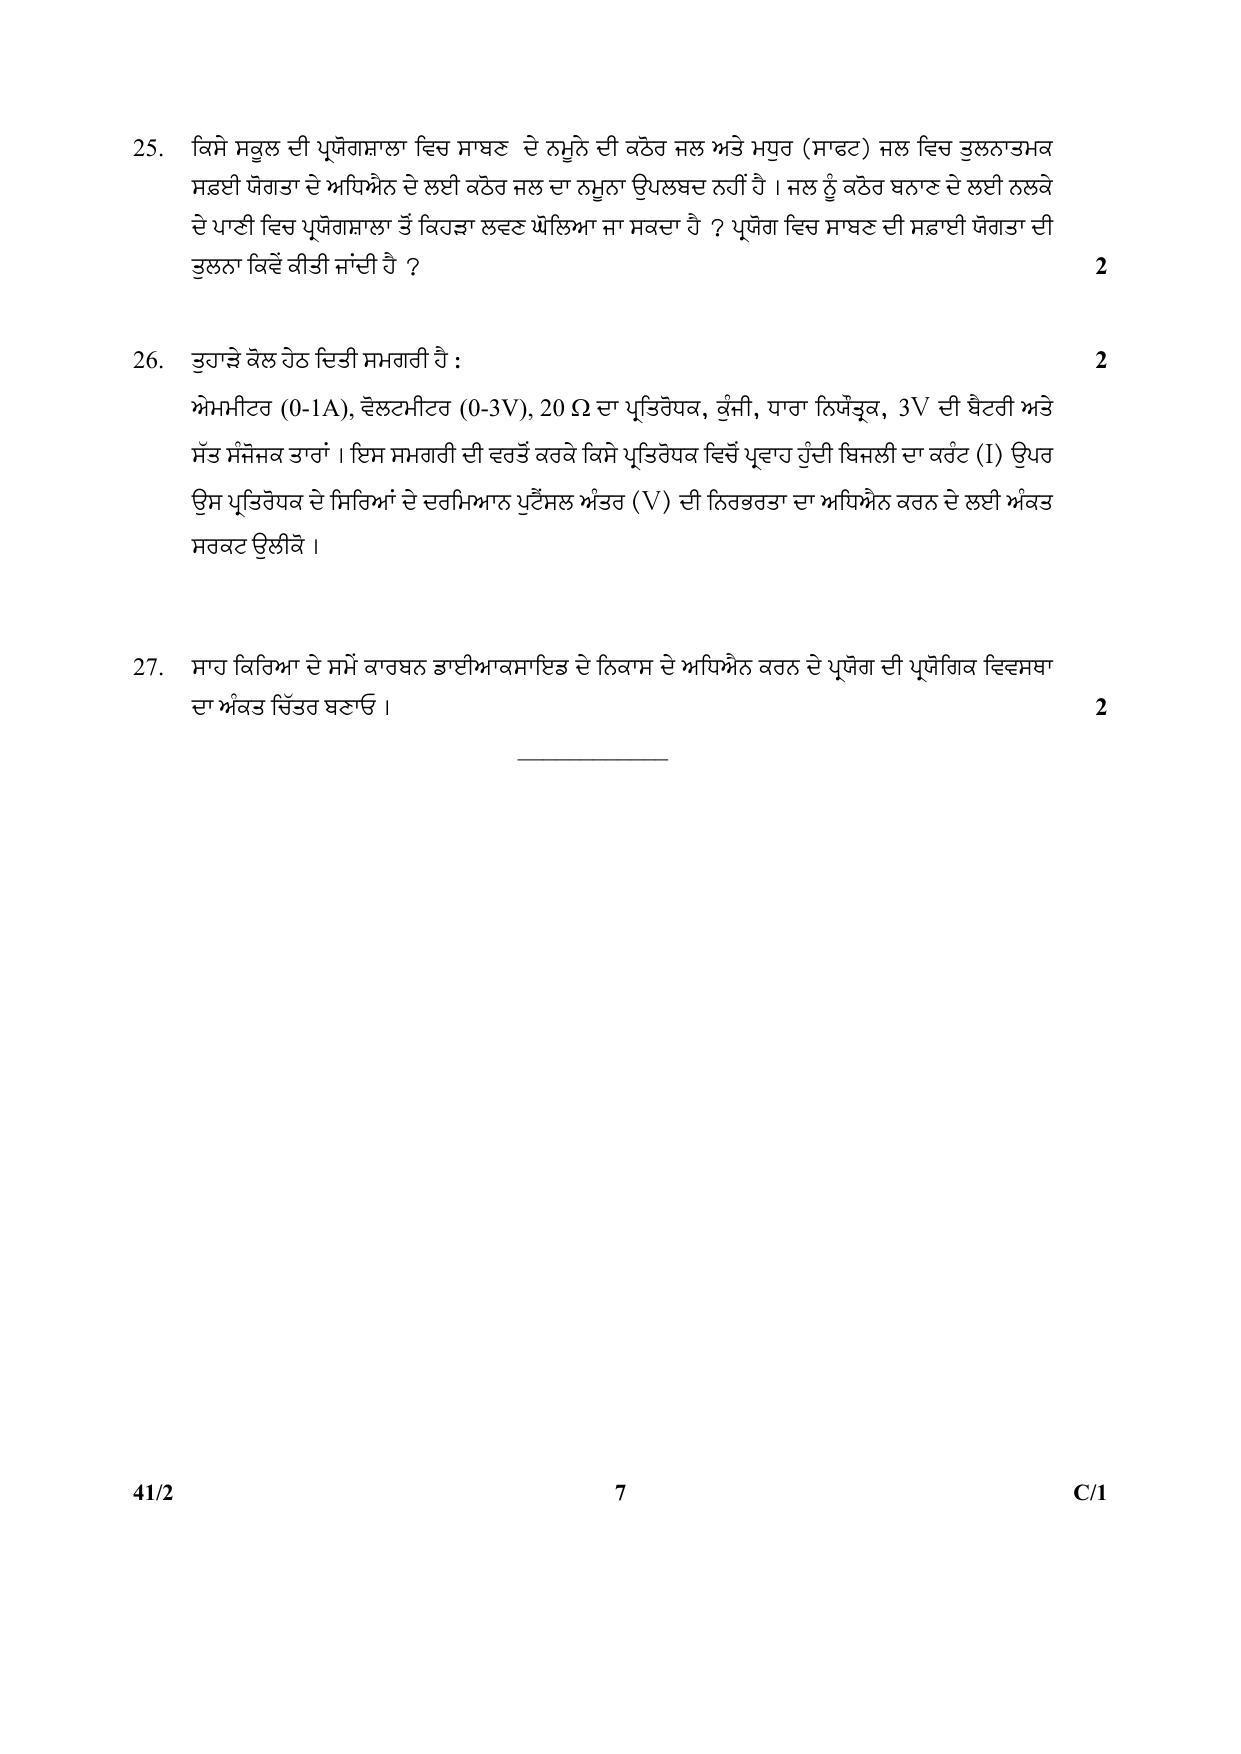 CBSE Class 10 41-2 Science PUNJABI VERSION 2018 Compartment Question Paper - Page 7